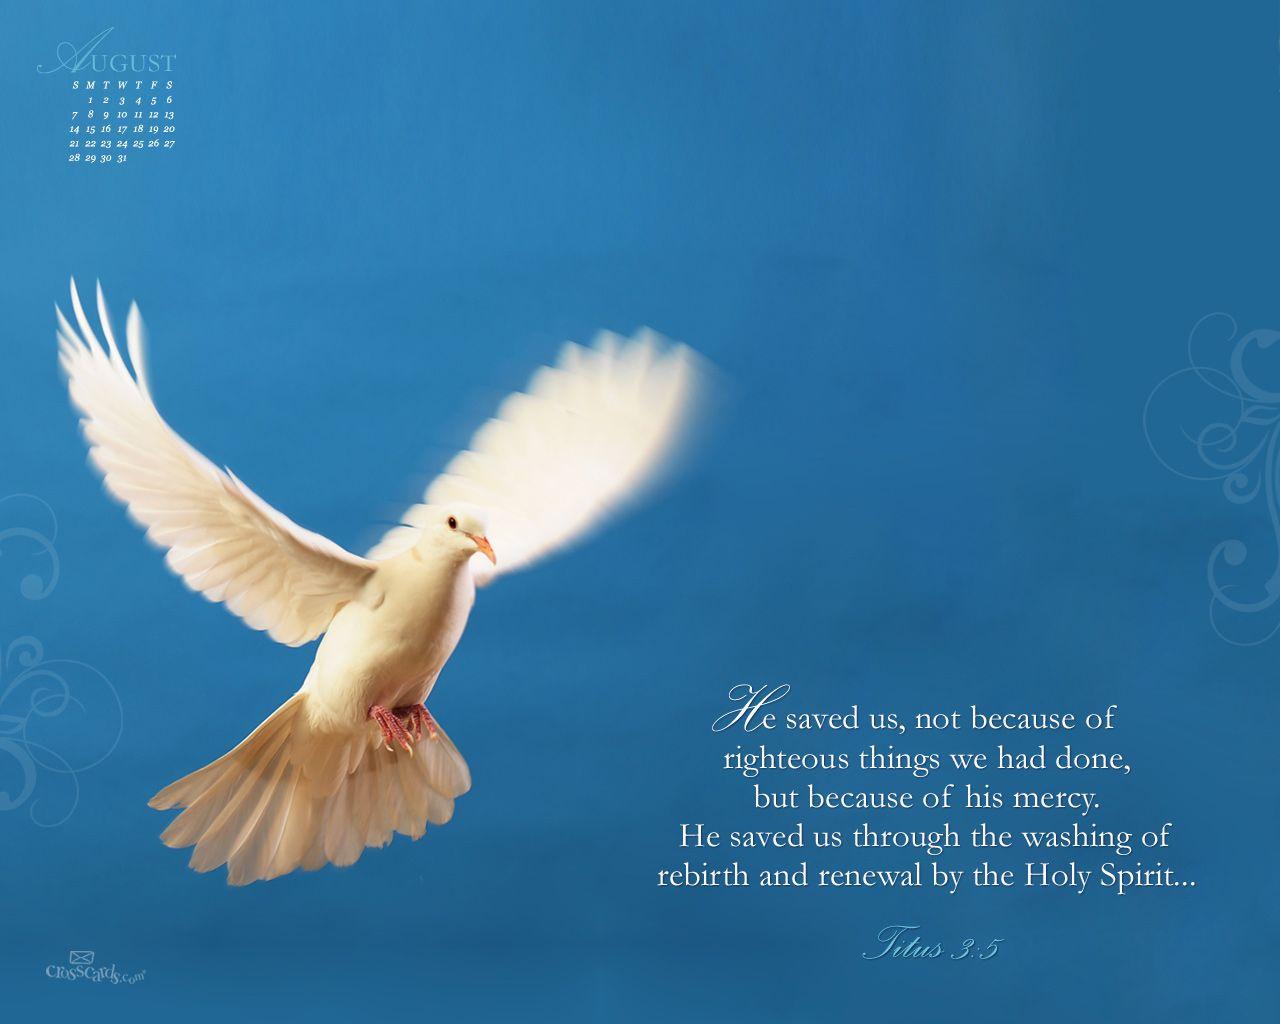 Christian Desktop Calendar Wallpaper. Free christian wallpaper, New year background image, Spiritual background